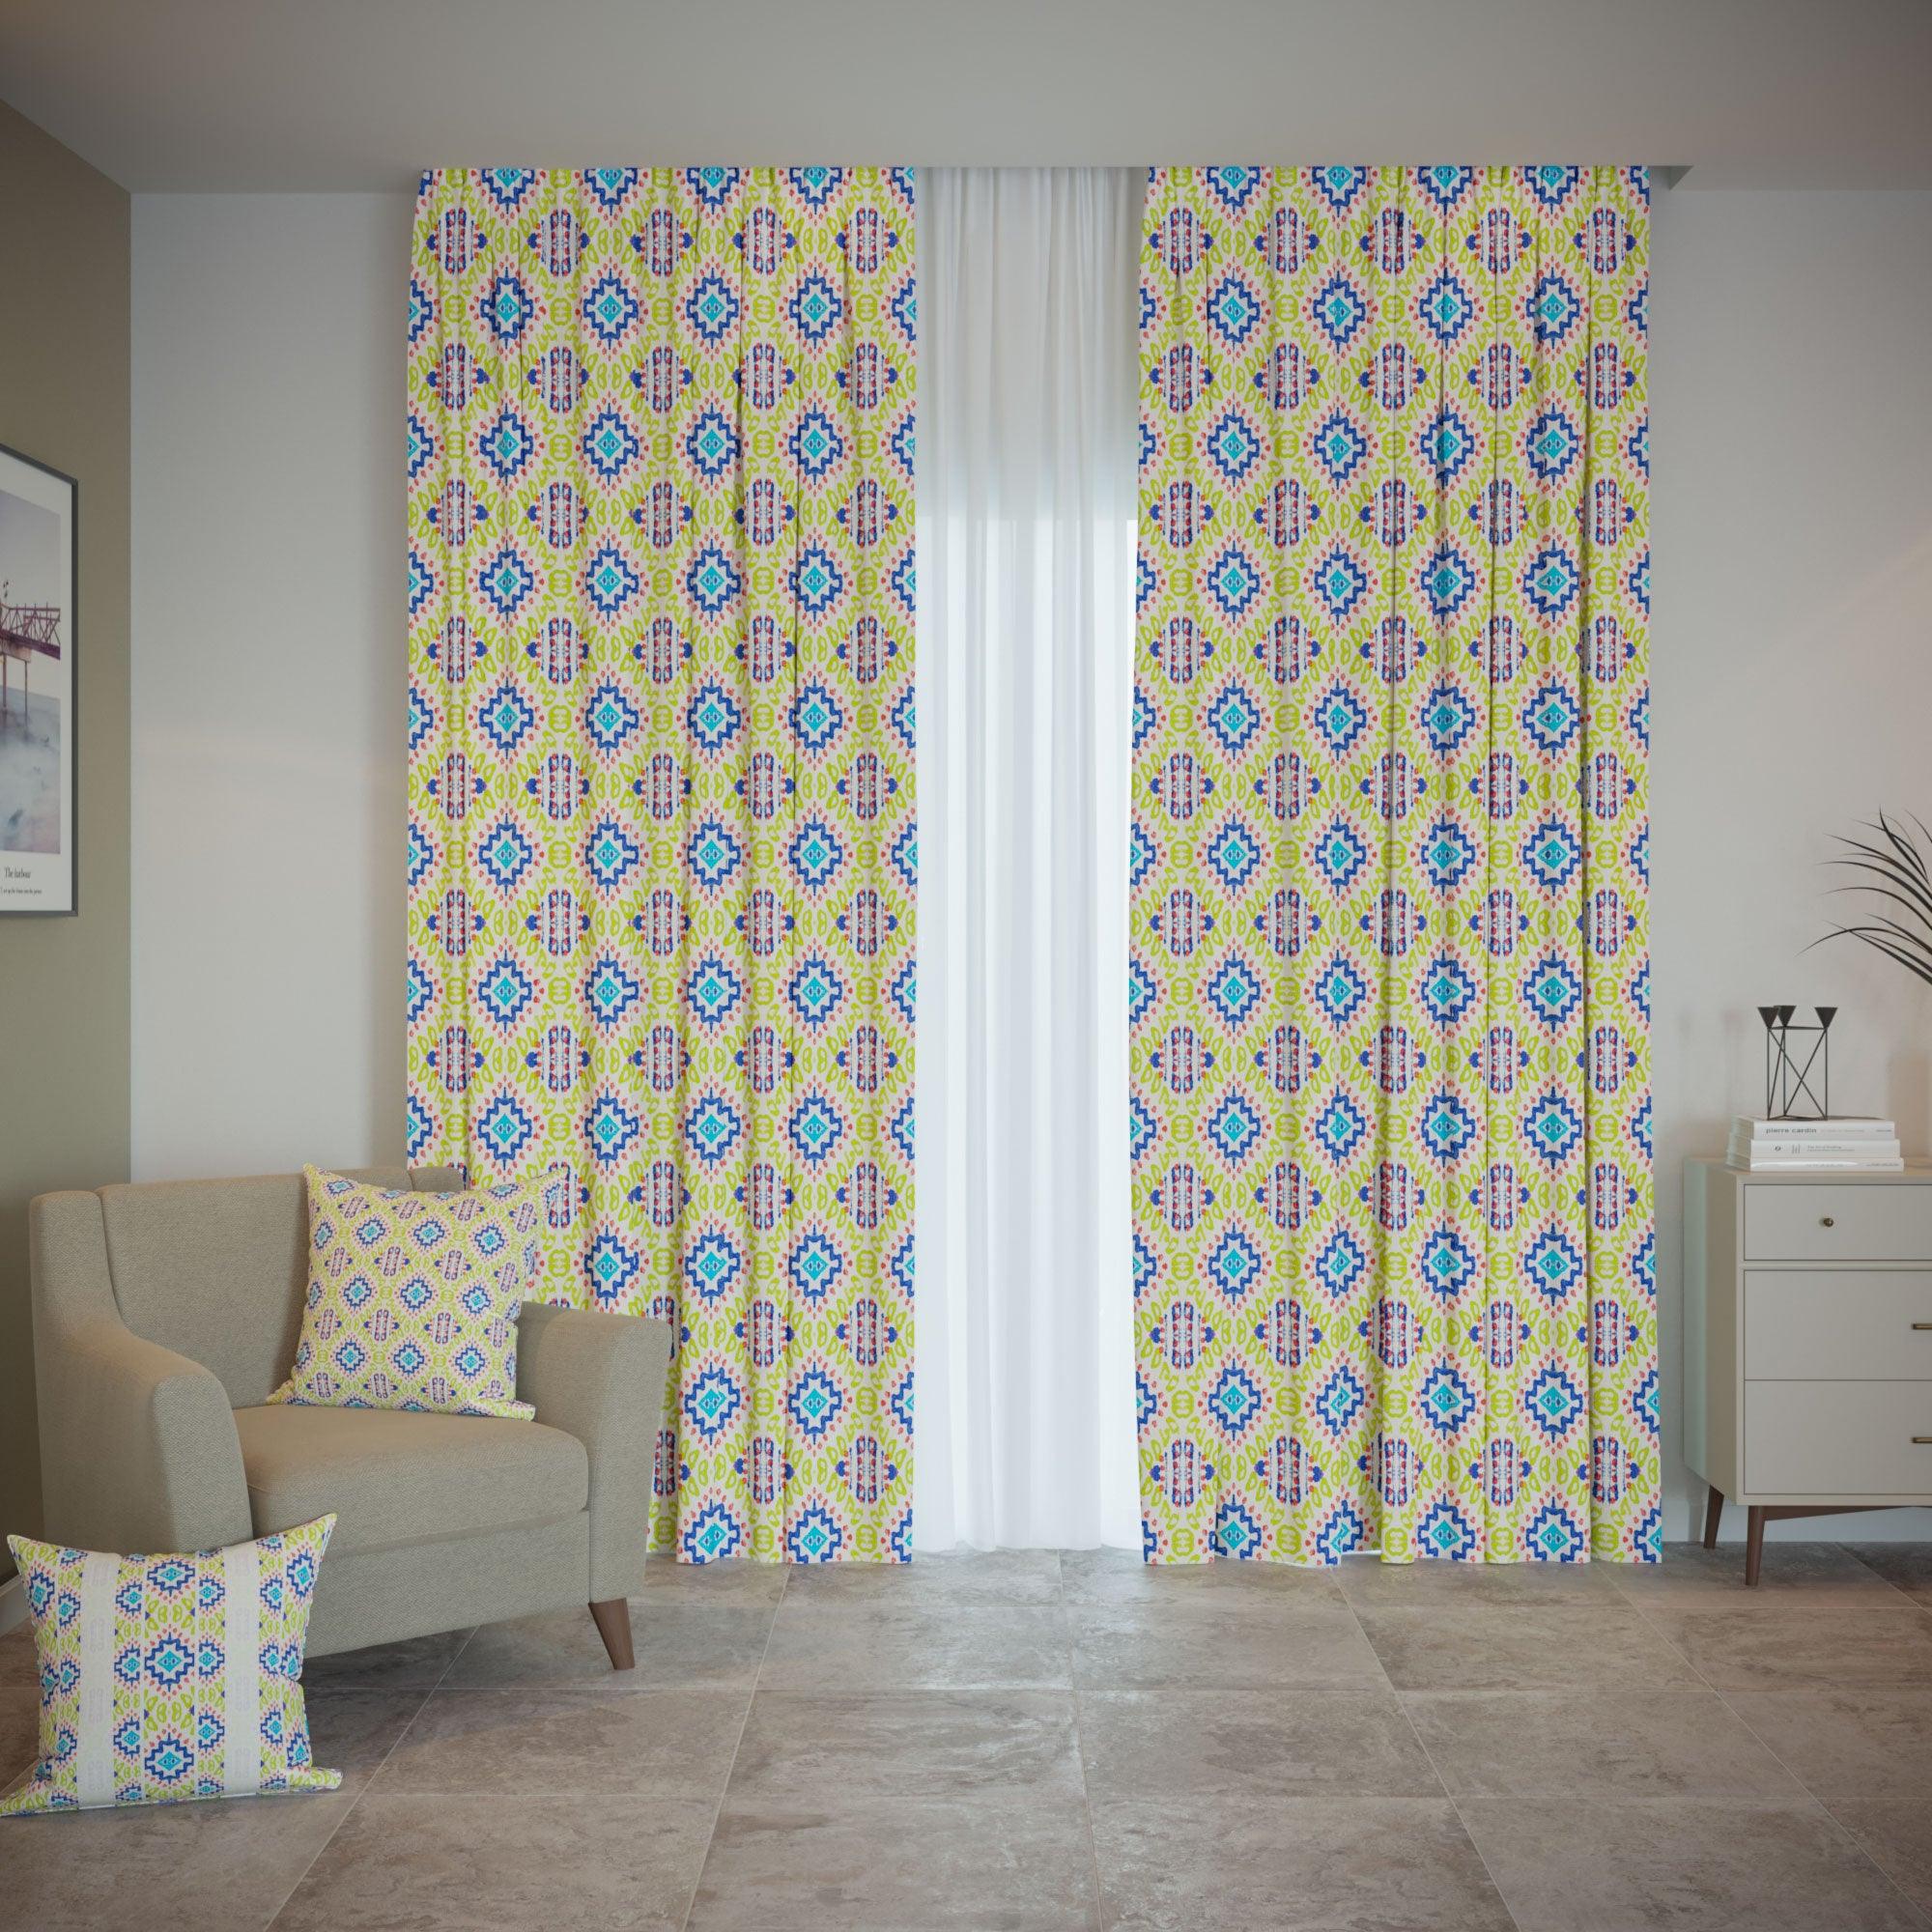 Sweet Candy Treat Curtain Panels (Set of 2) - Karen Fabrics